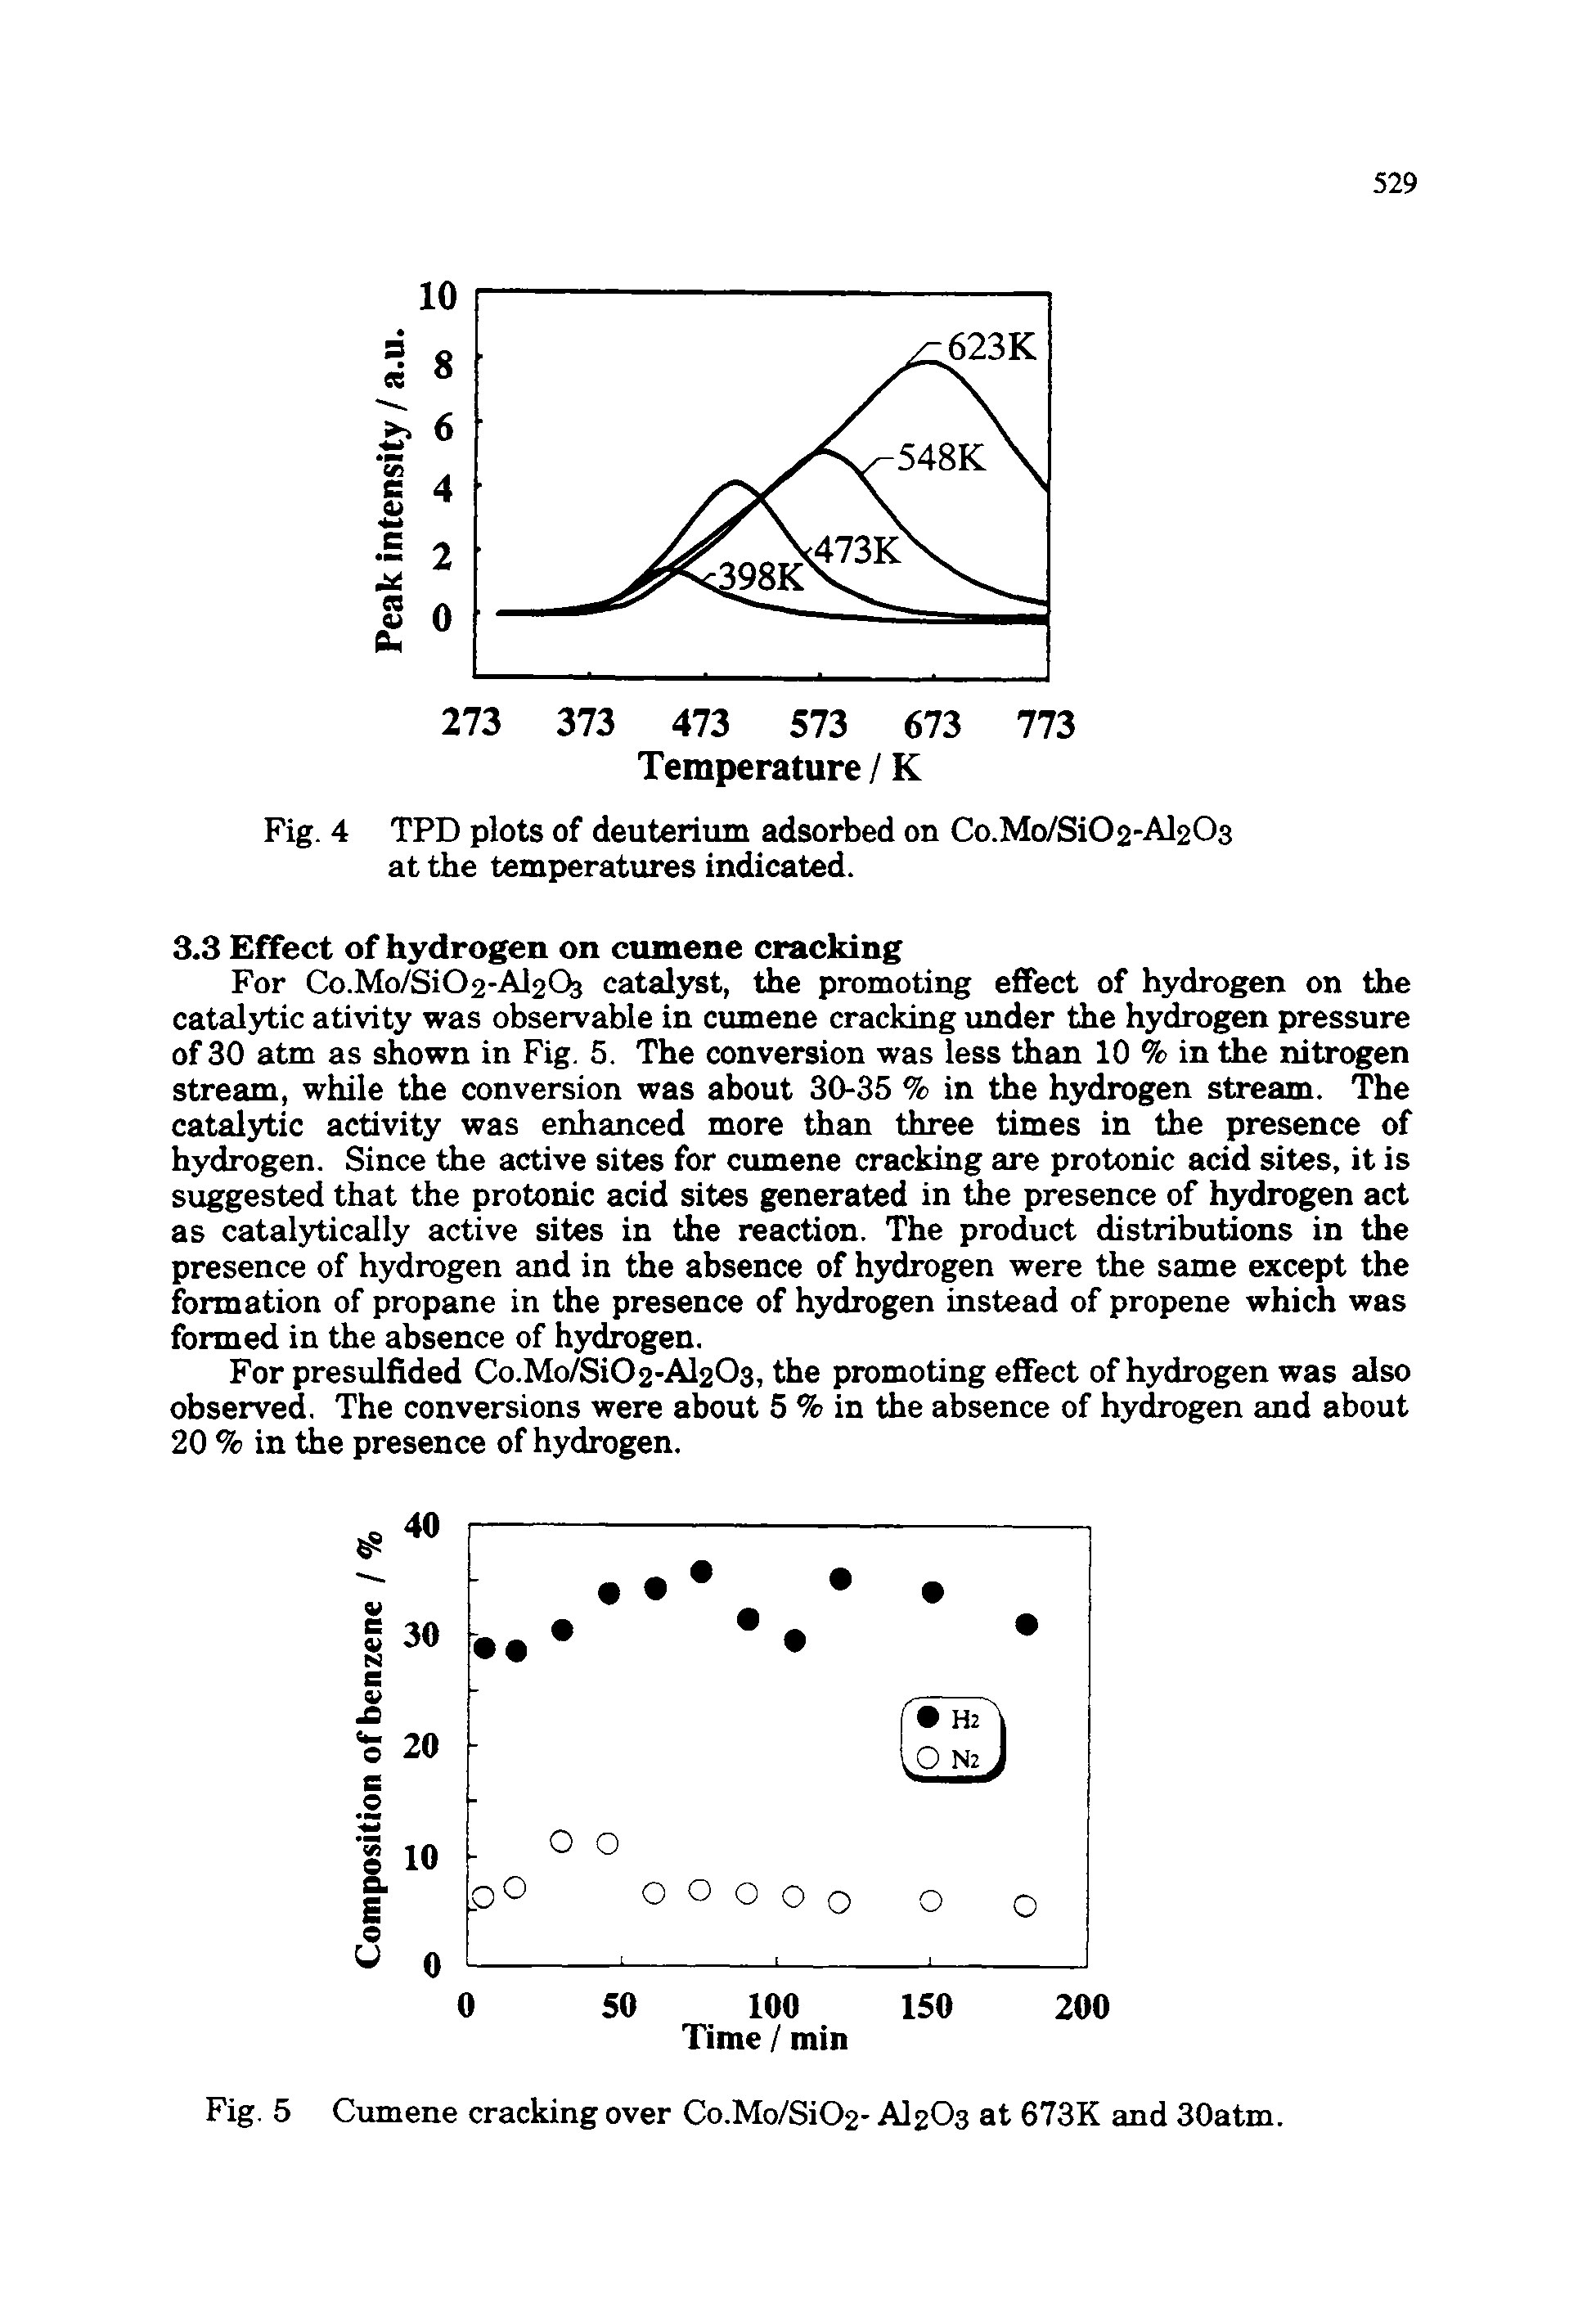 Fig. 5 Cumene cracking over Co.Mo/Si02- AI2O3 at 673K and 30atm.